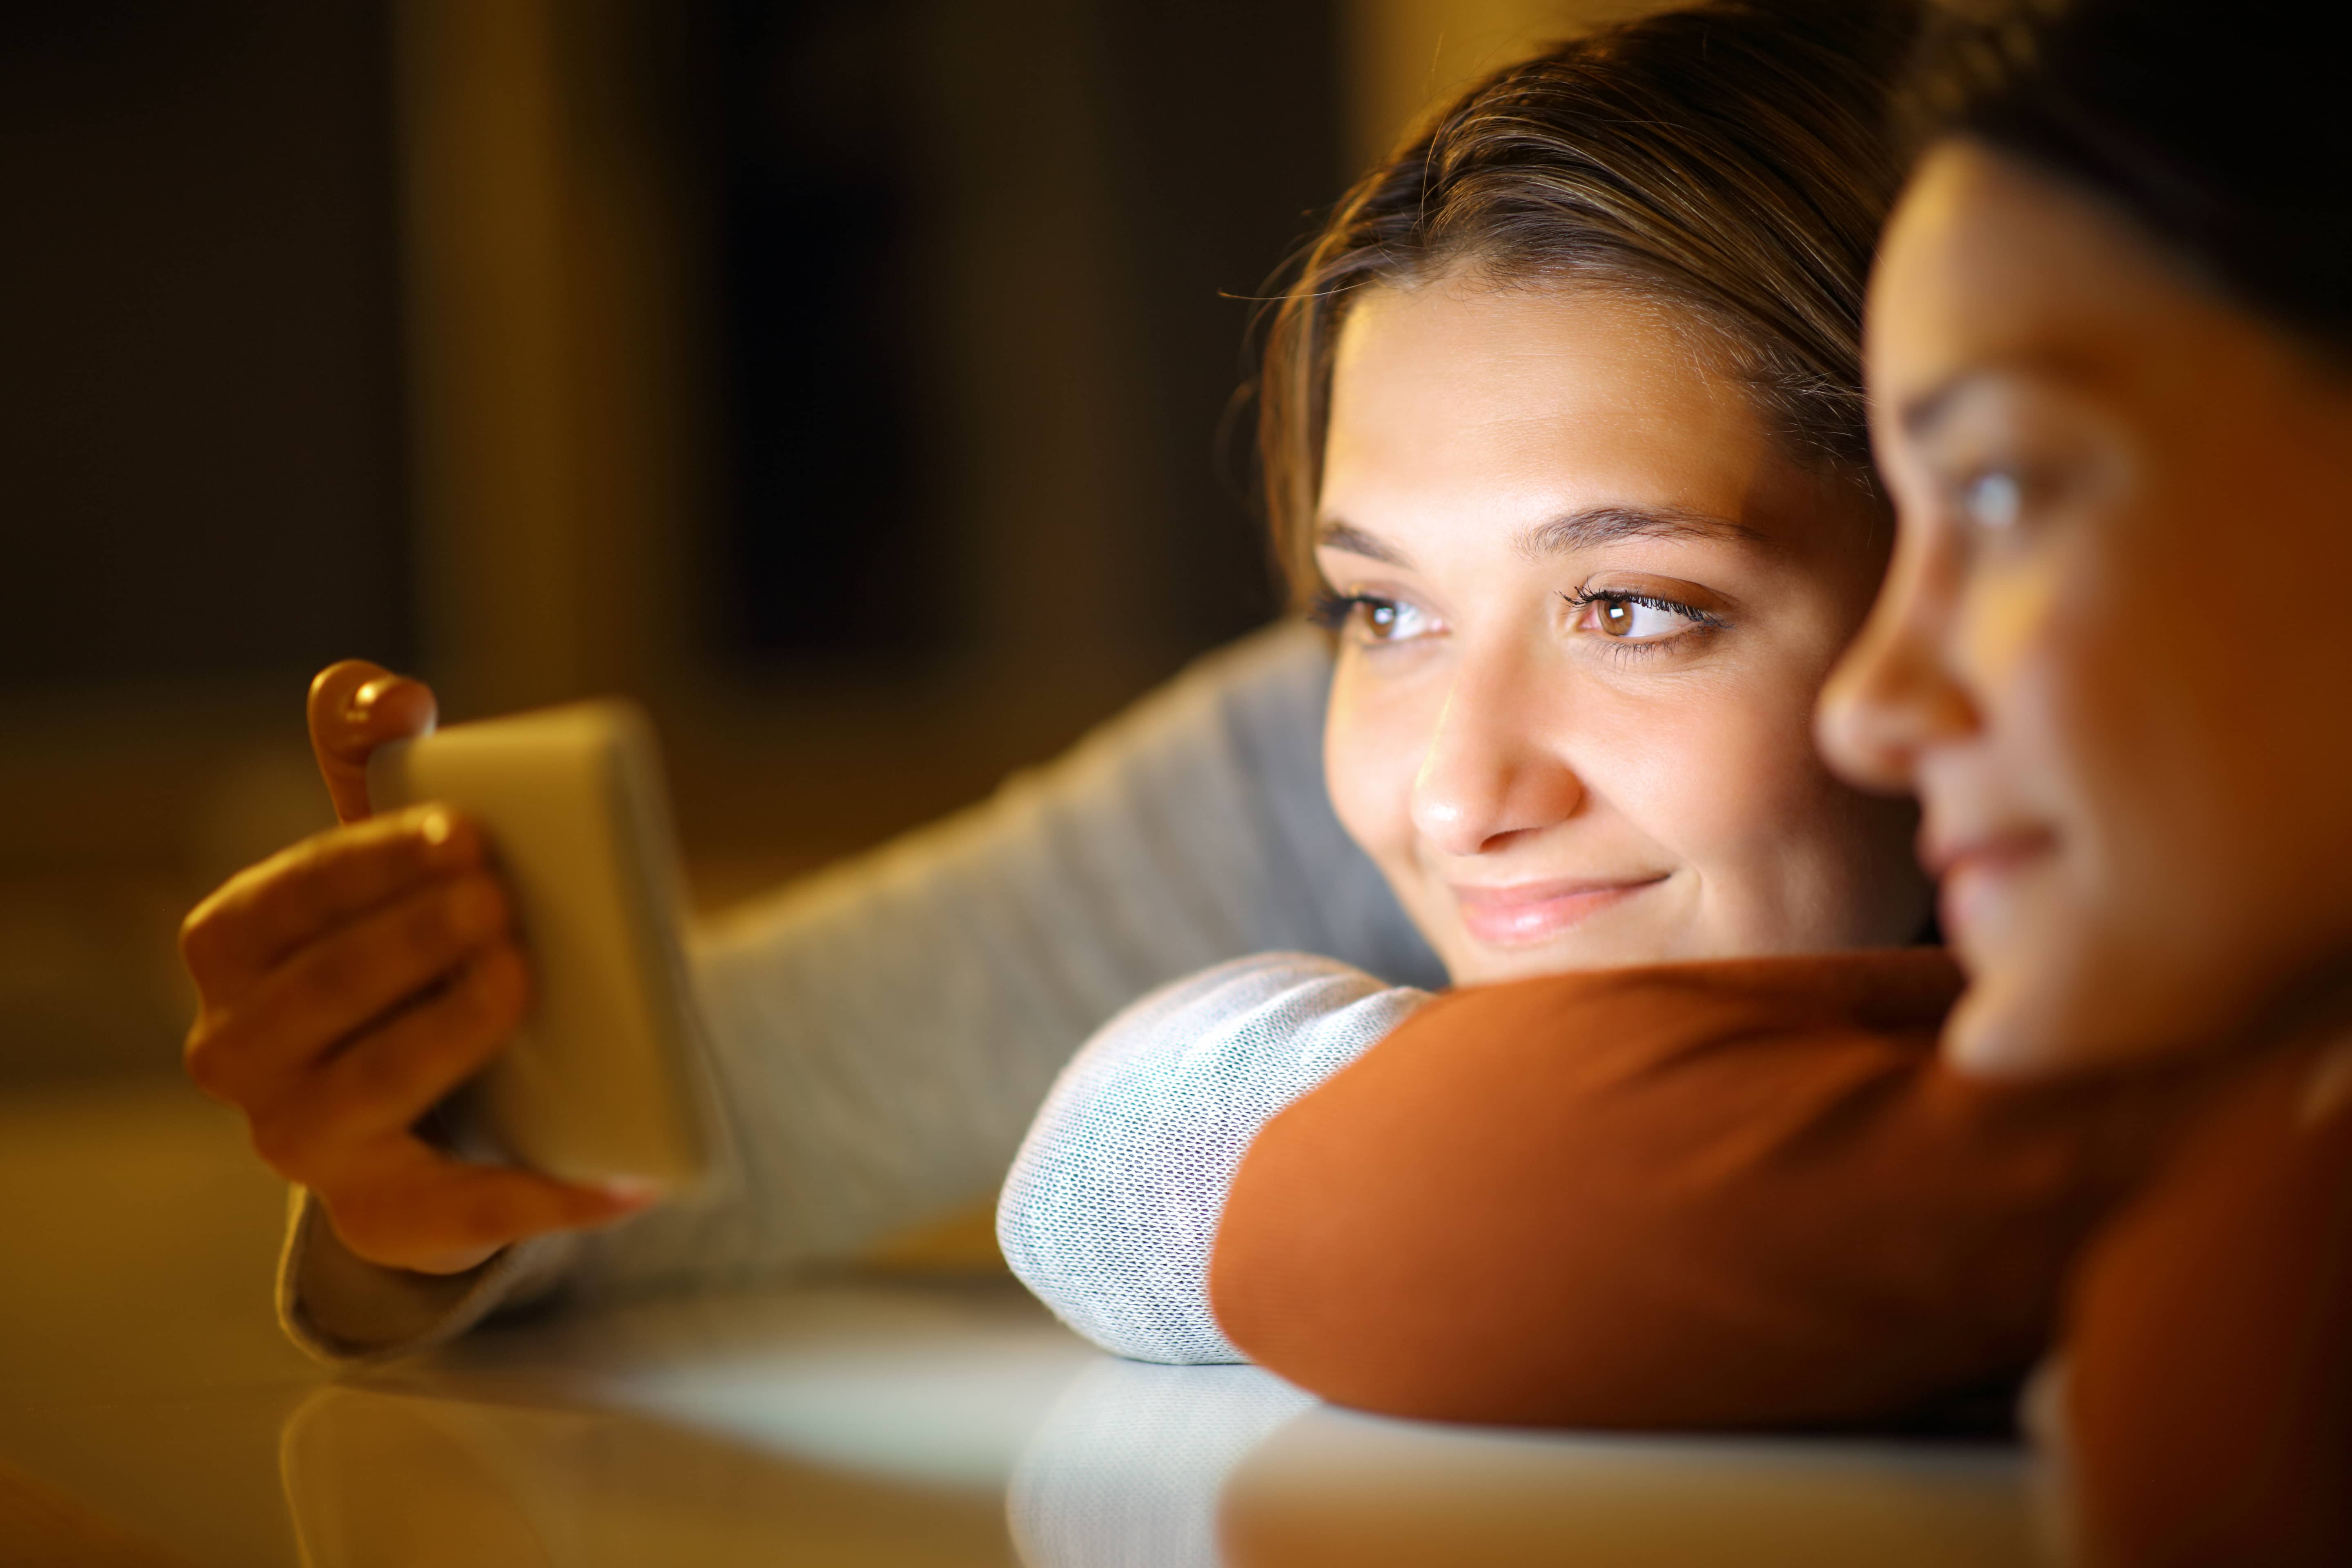 Teenage girls on their smartphones at bedtime.